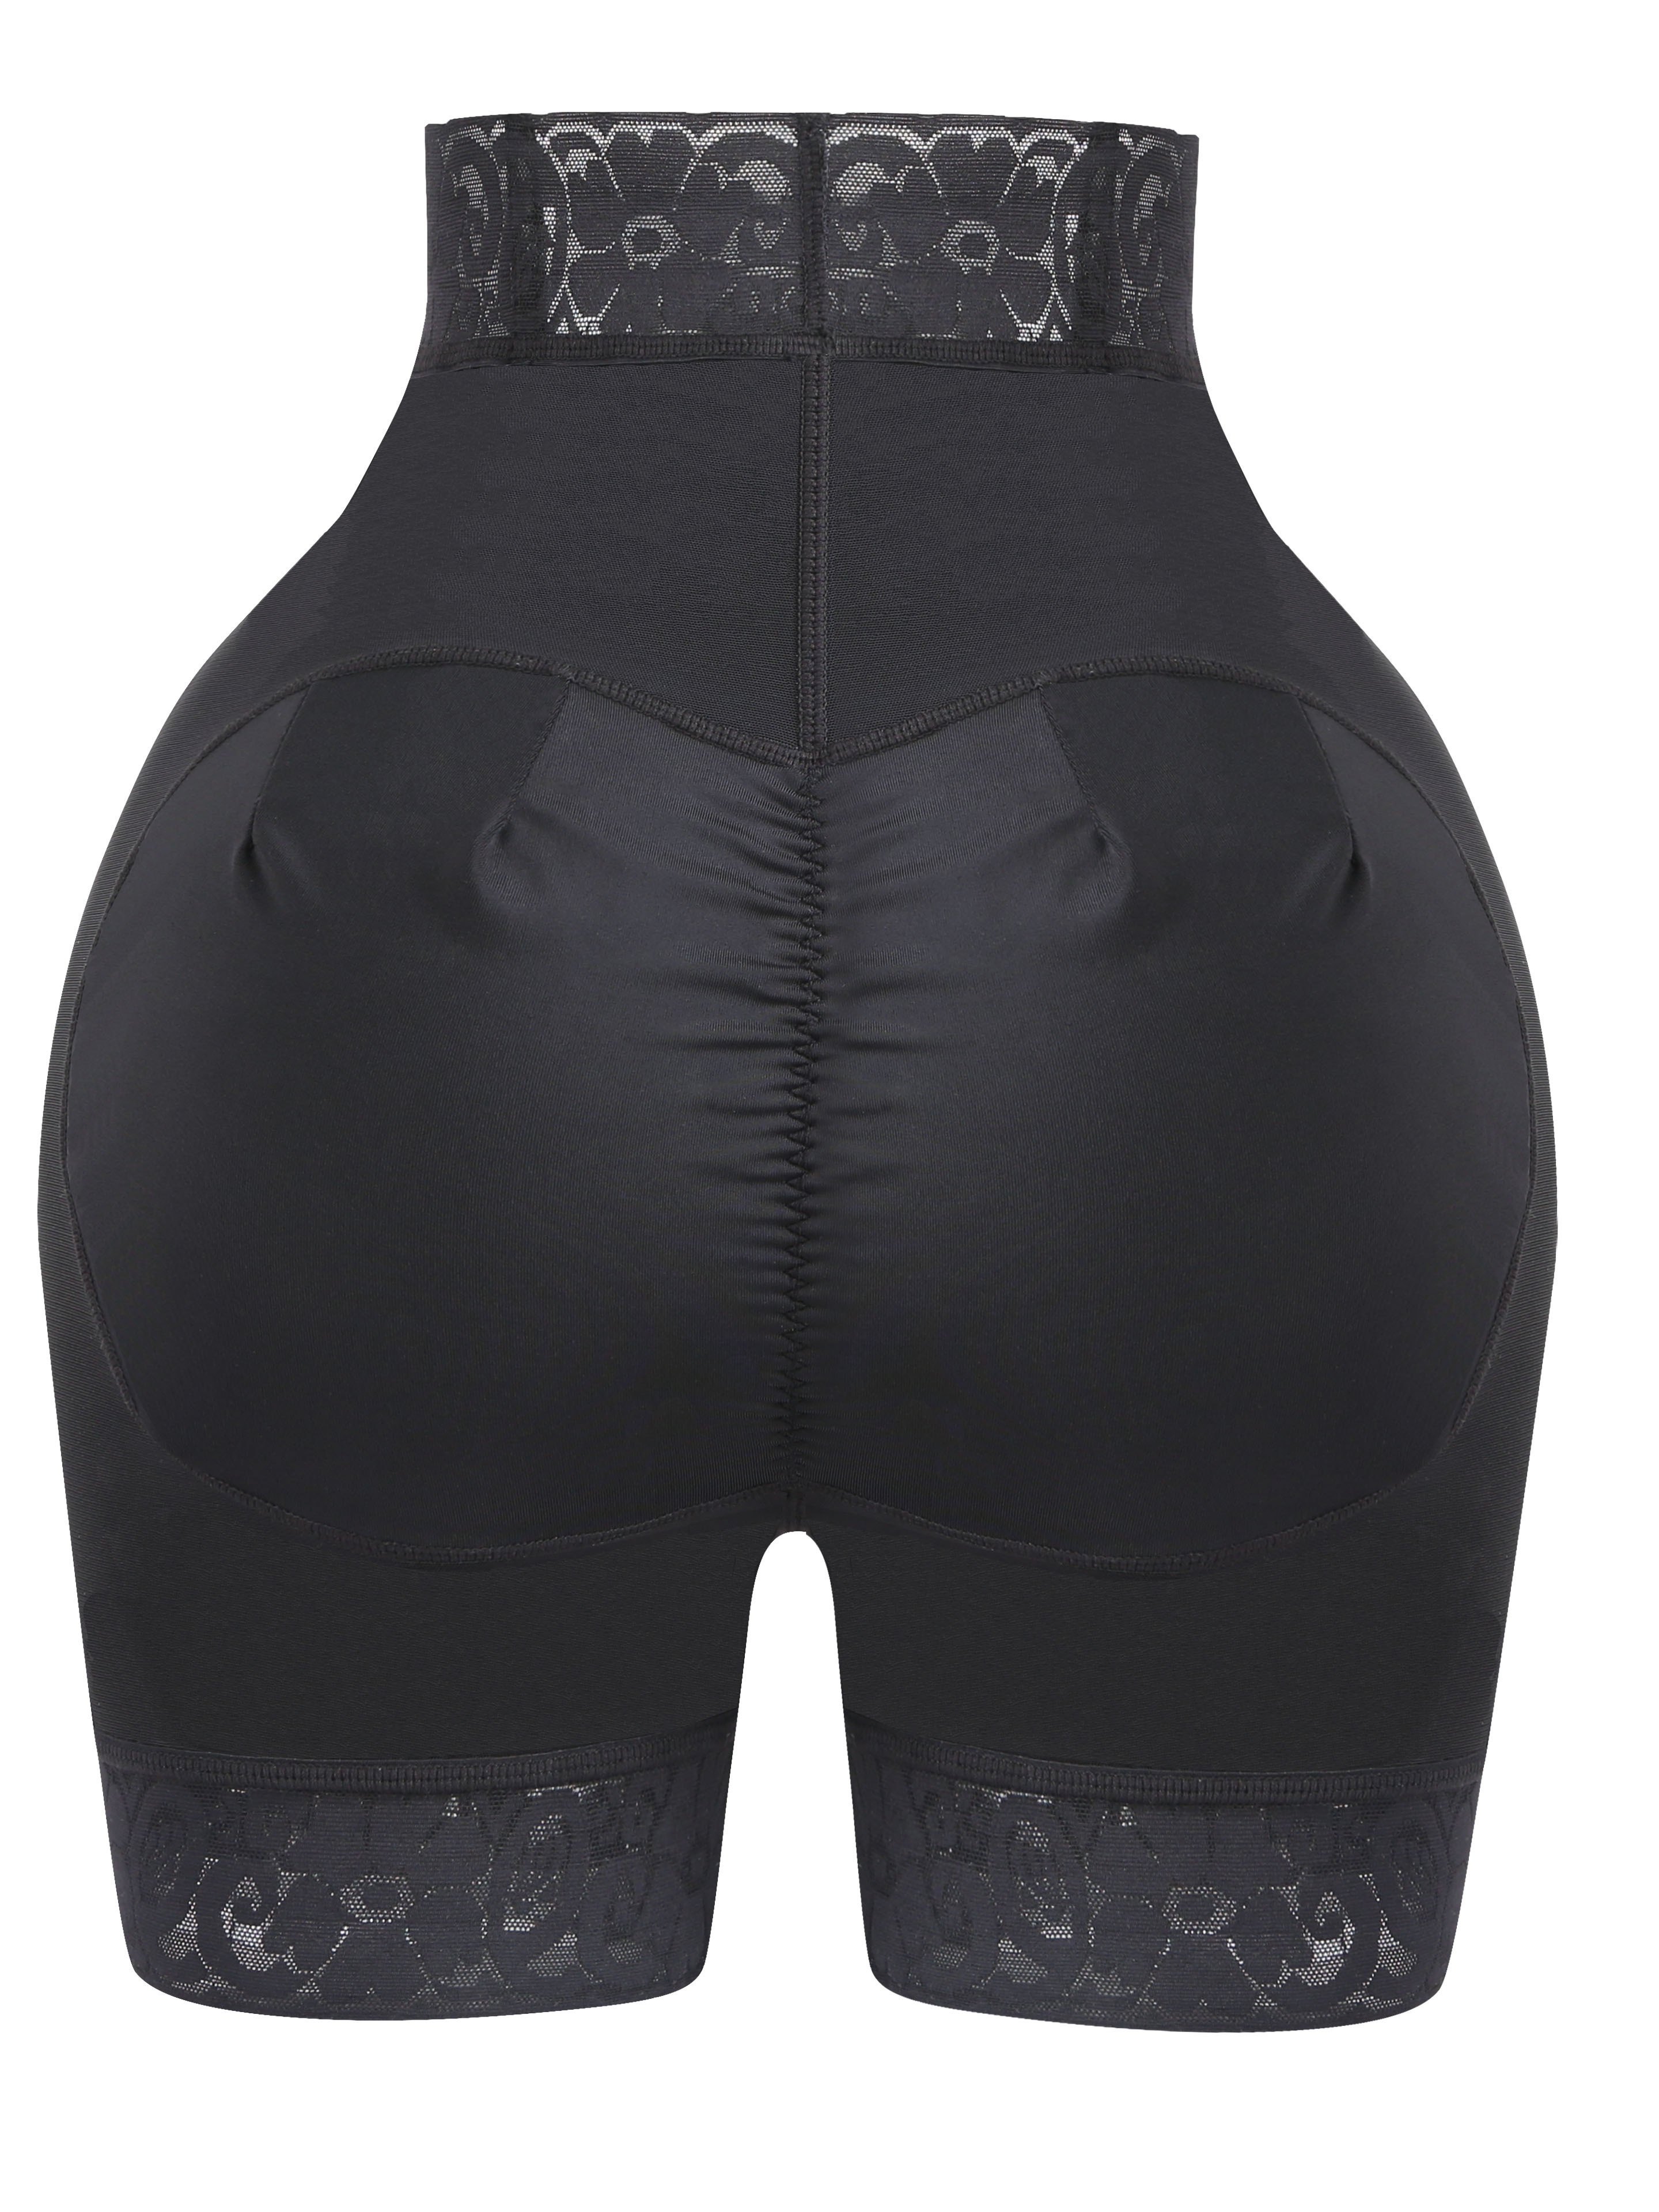 Light shapewear shorts with lace trim - Black - Sz. 42-60 - Zizzifashion